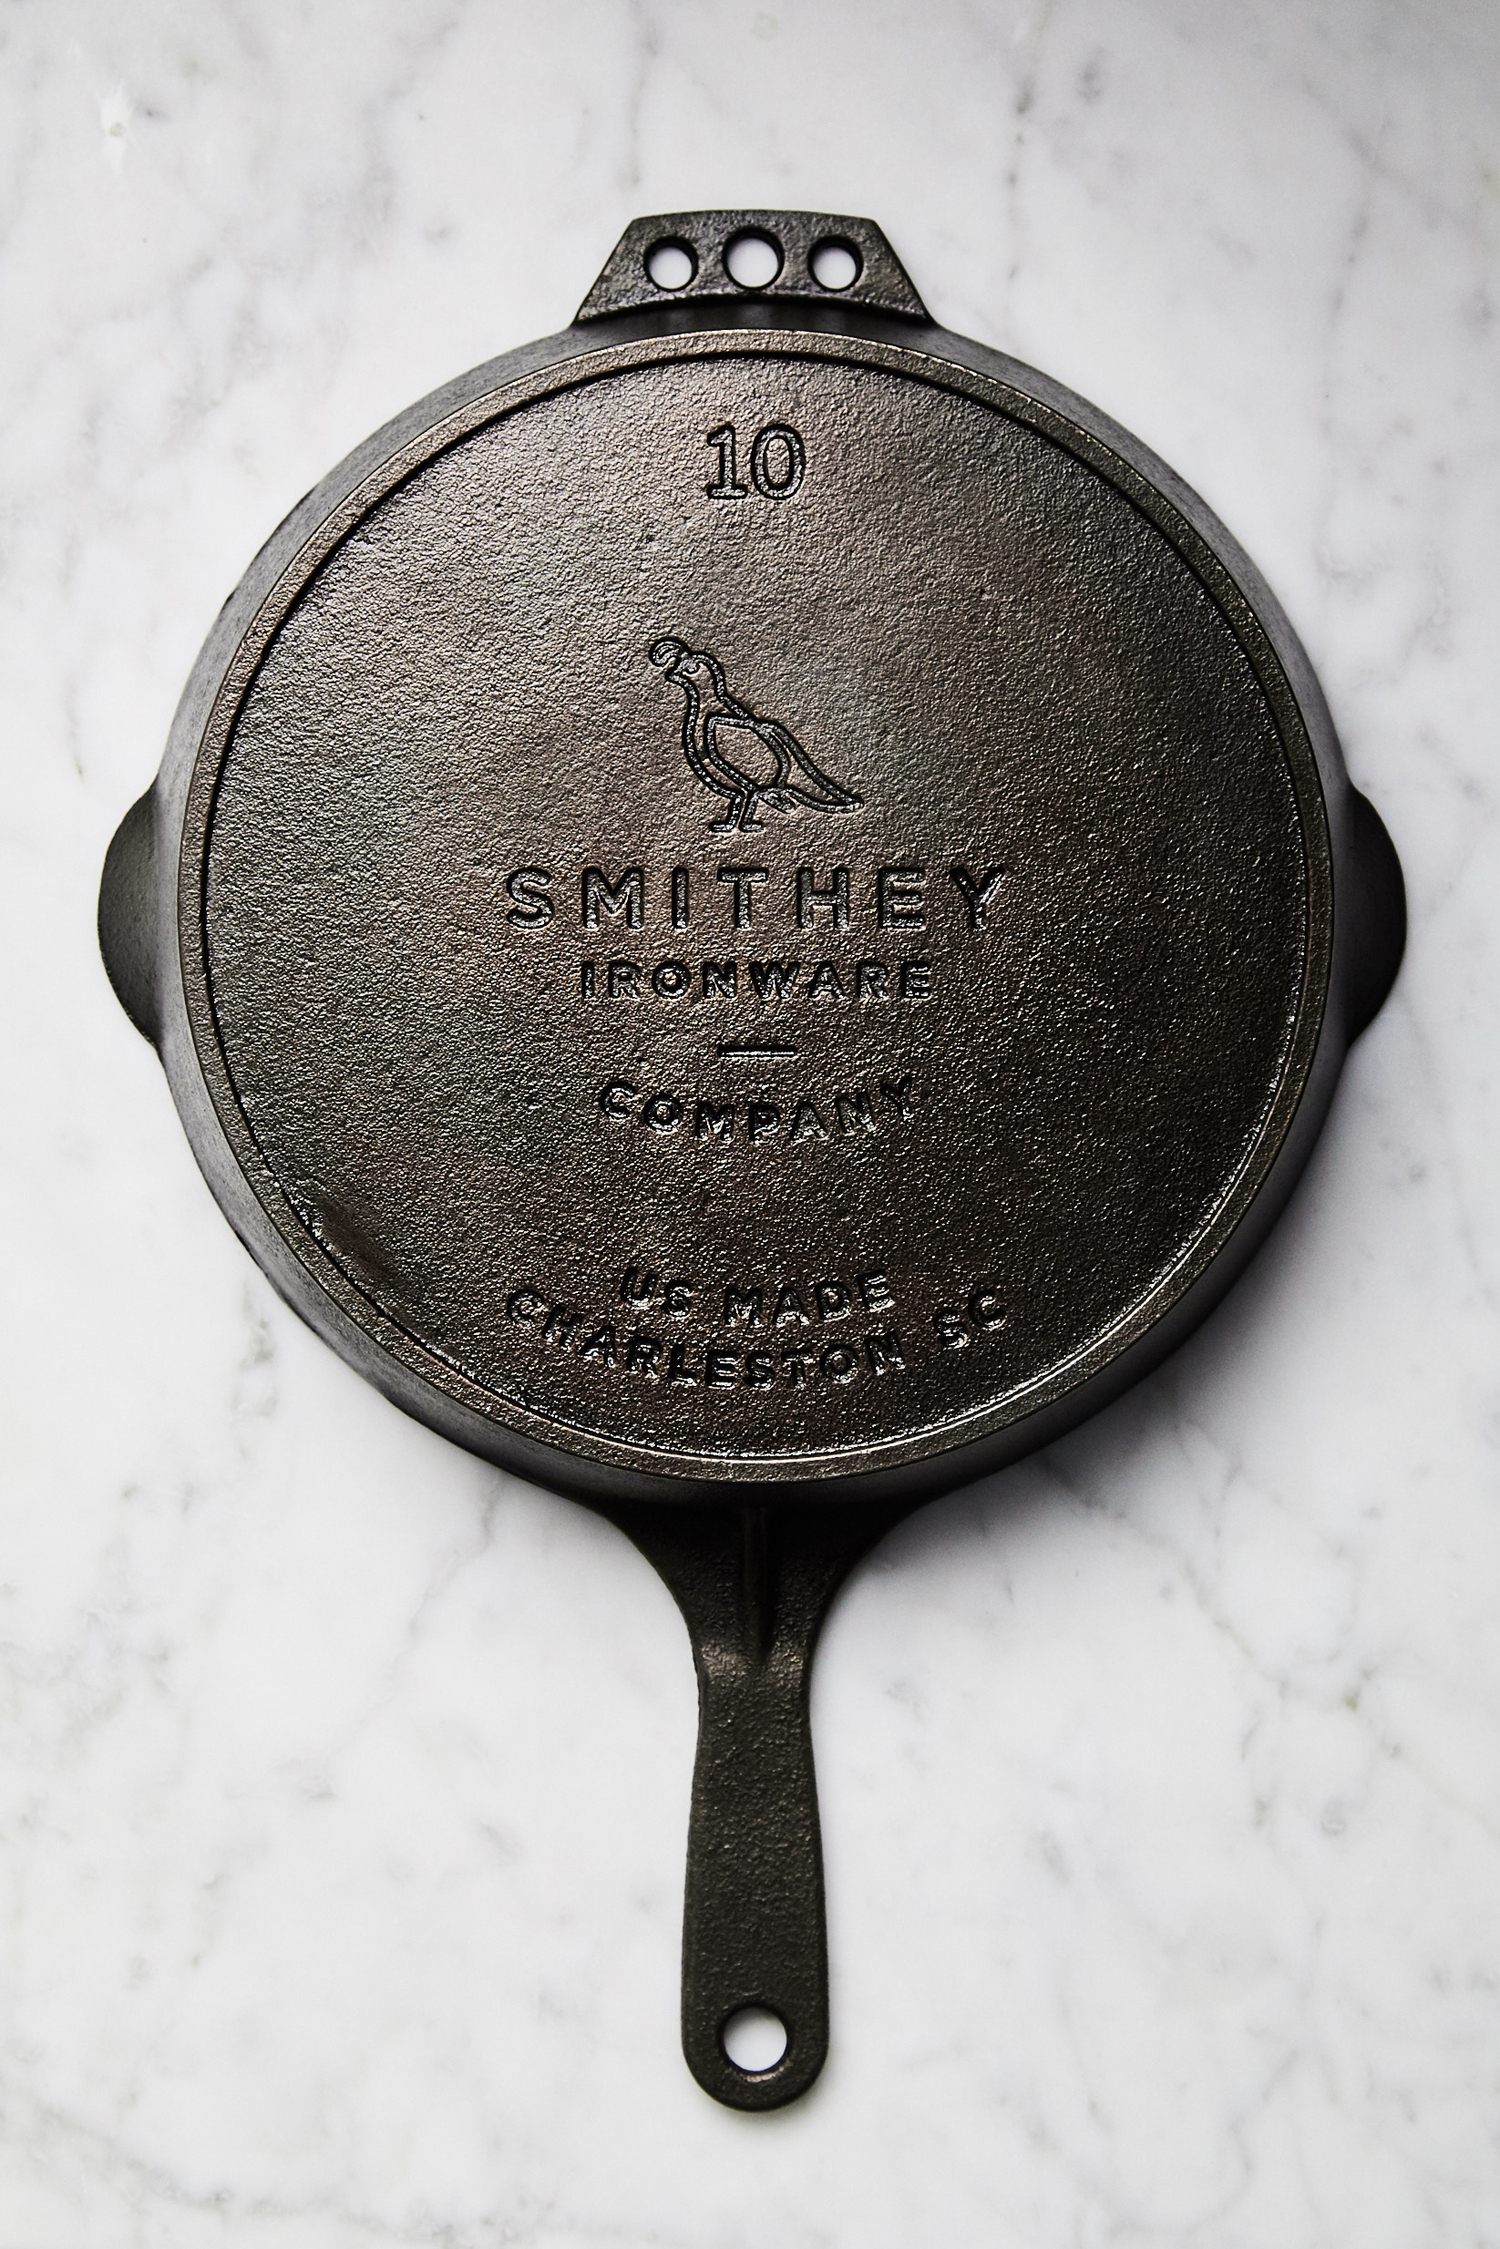 Brand identity for Smithey Ironware Company by Charleston based Stitch, United States